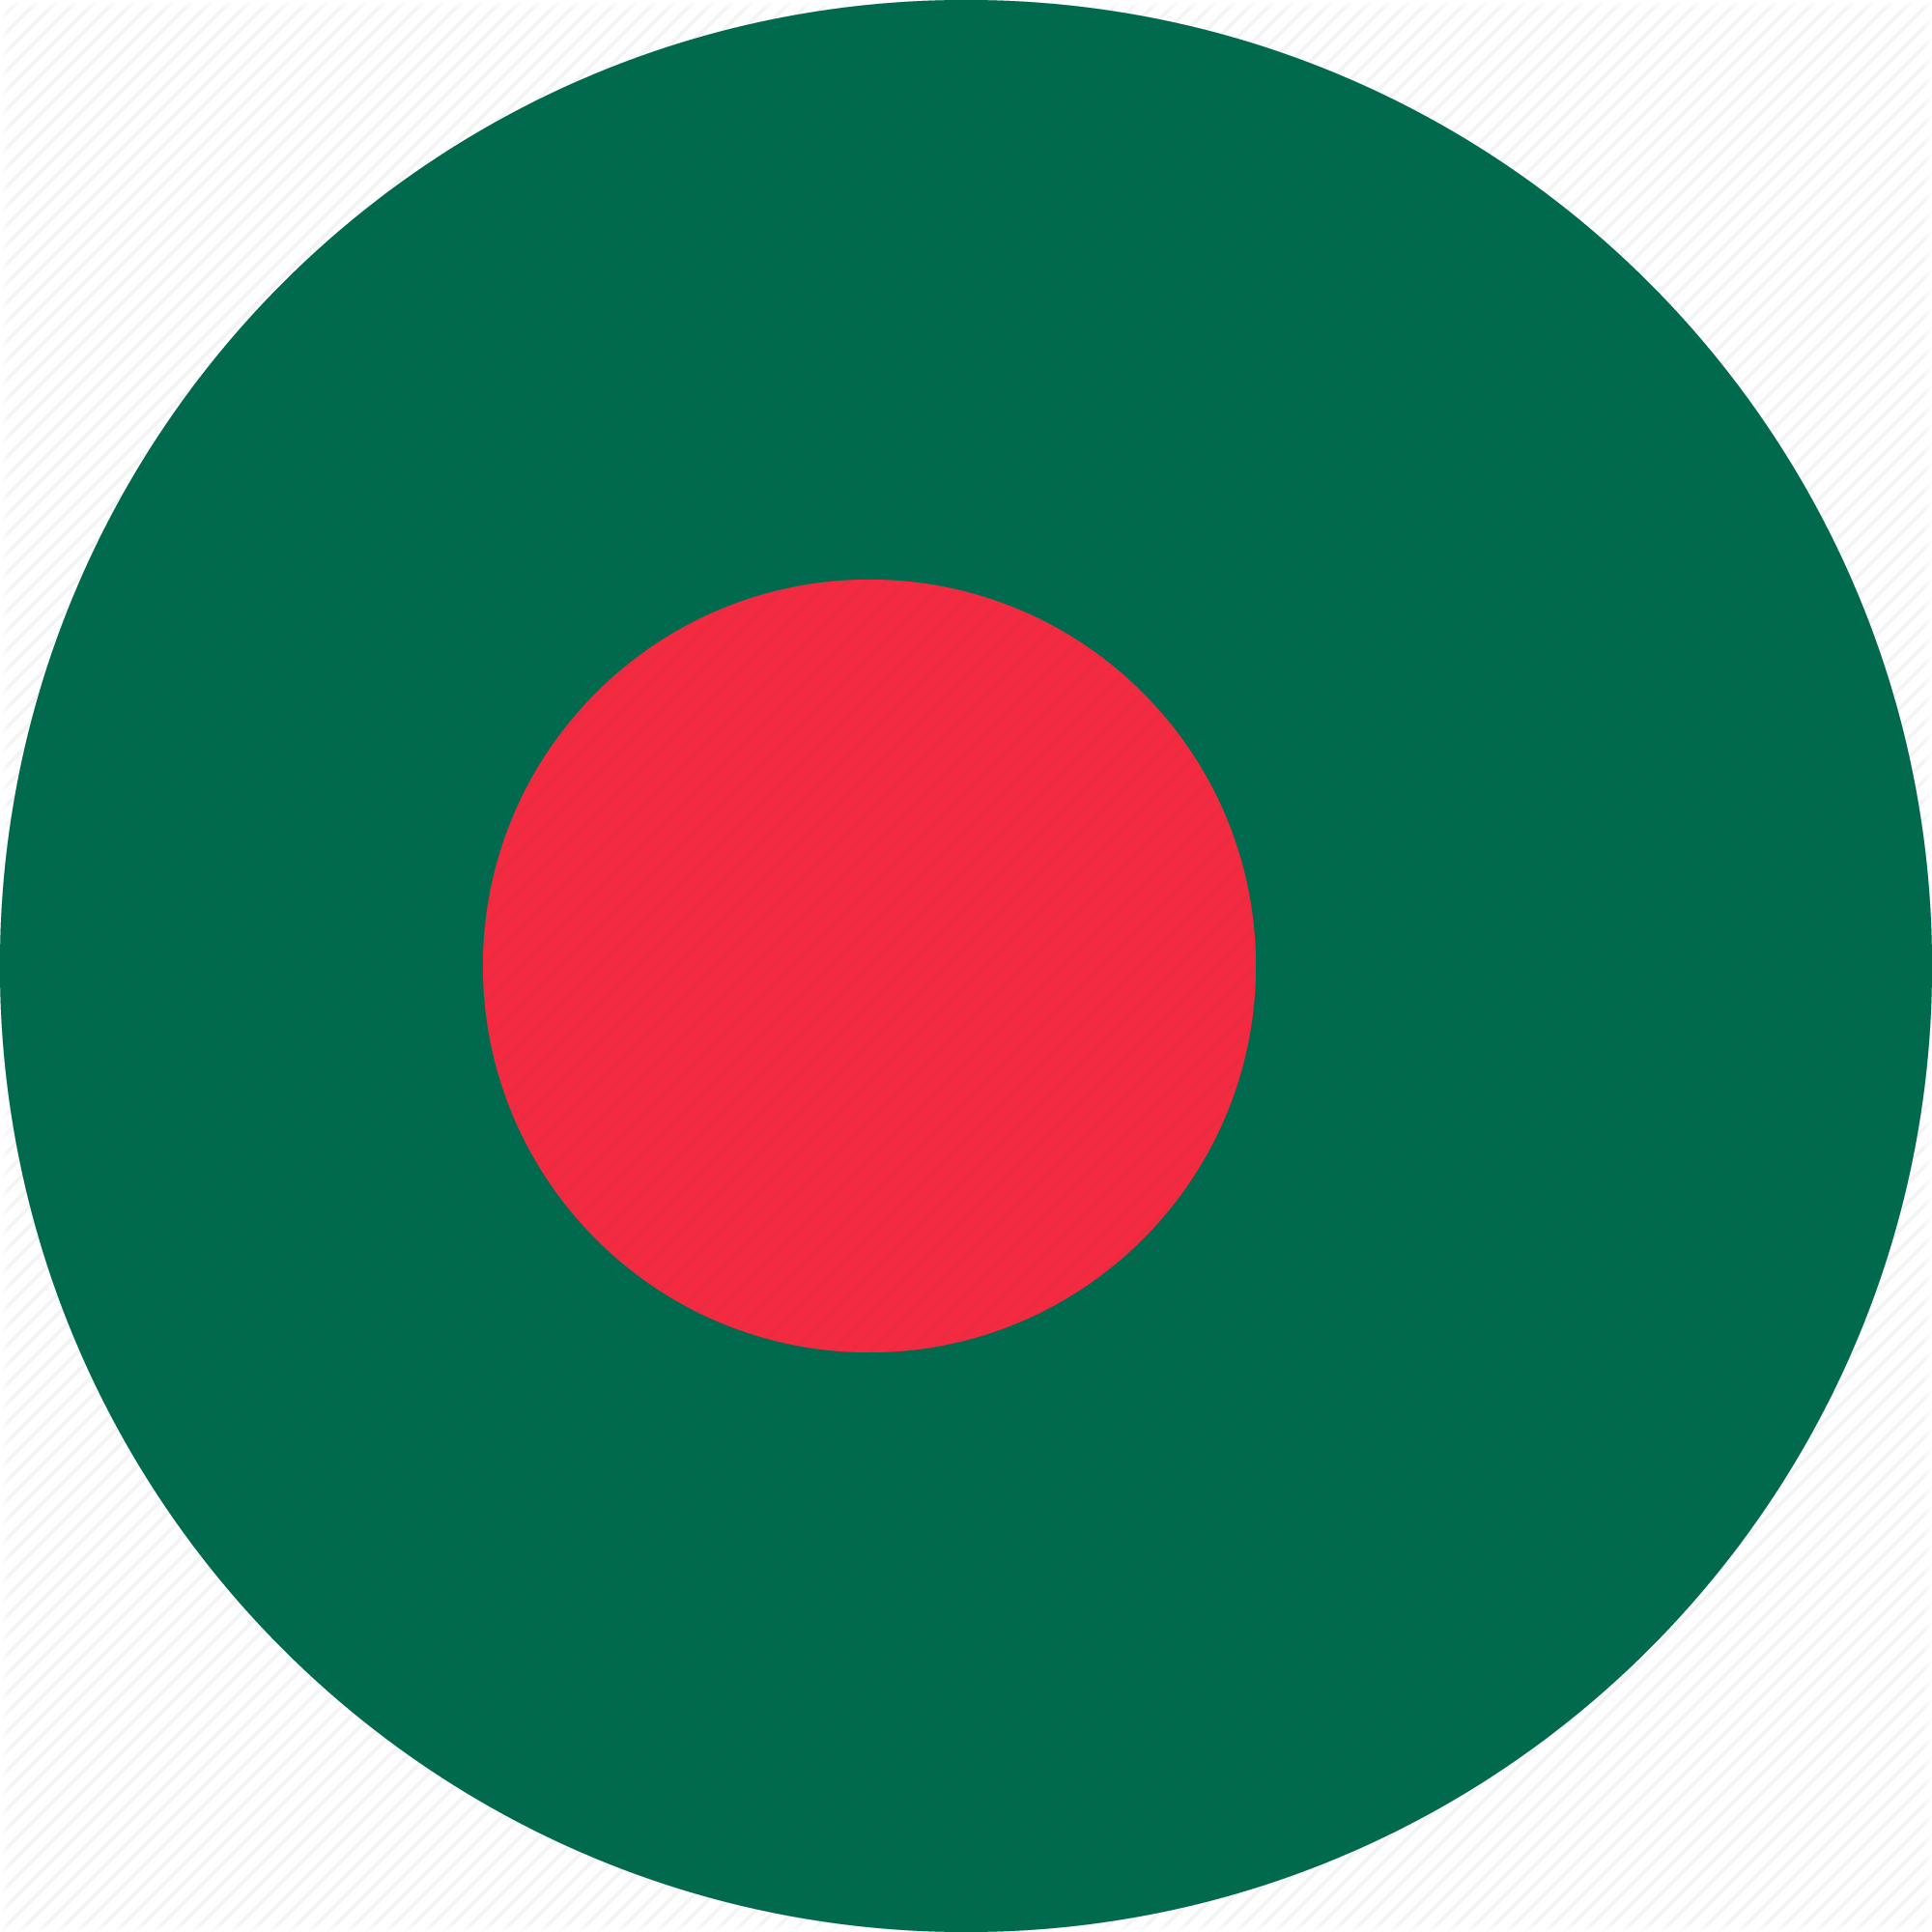 Bangladesh Flag Png Images Transparent Background Png Play Part 2